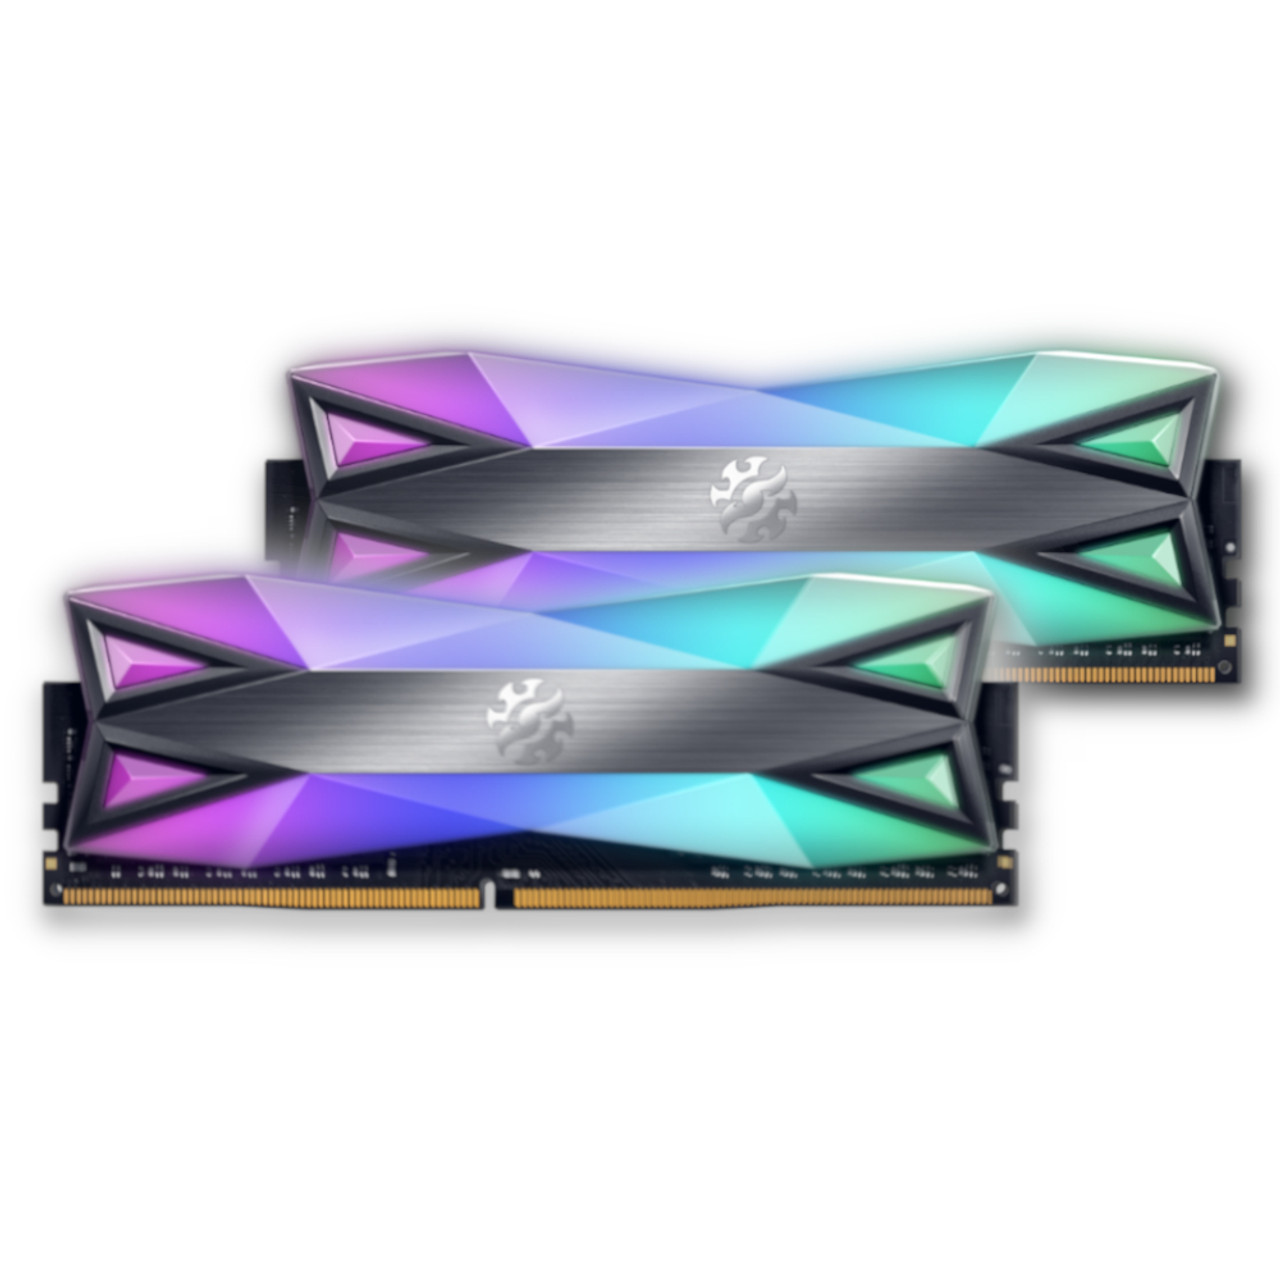 SPECTRIX D60G RGB Desktop Memory: (2x16GB) DDR4 3200MHz CL16-20-20 | RGB w/ Grey Heatsink - 2PK | RAM PC4-25600 XPG